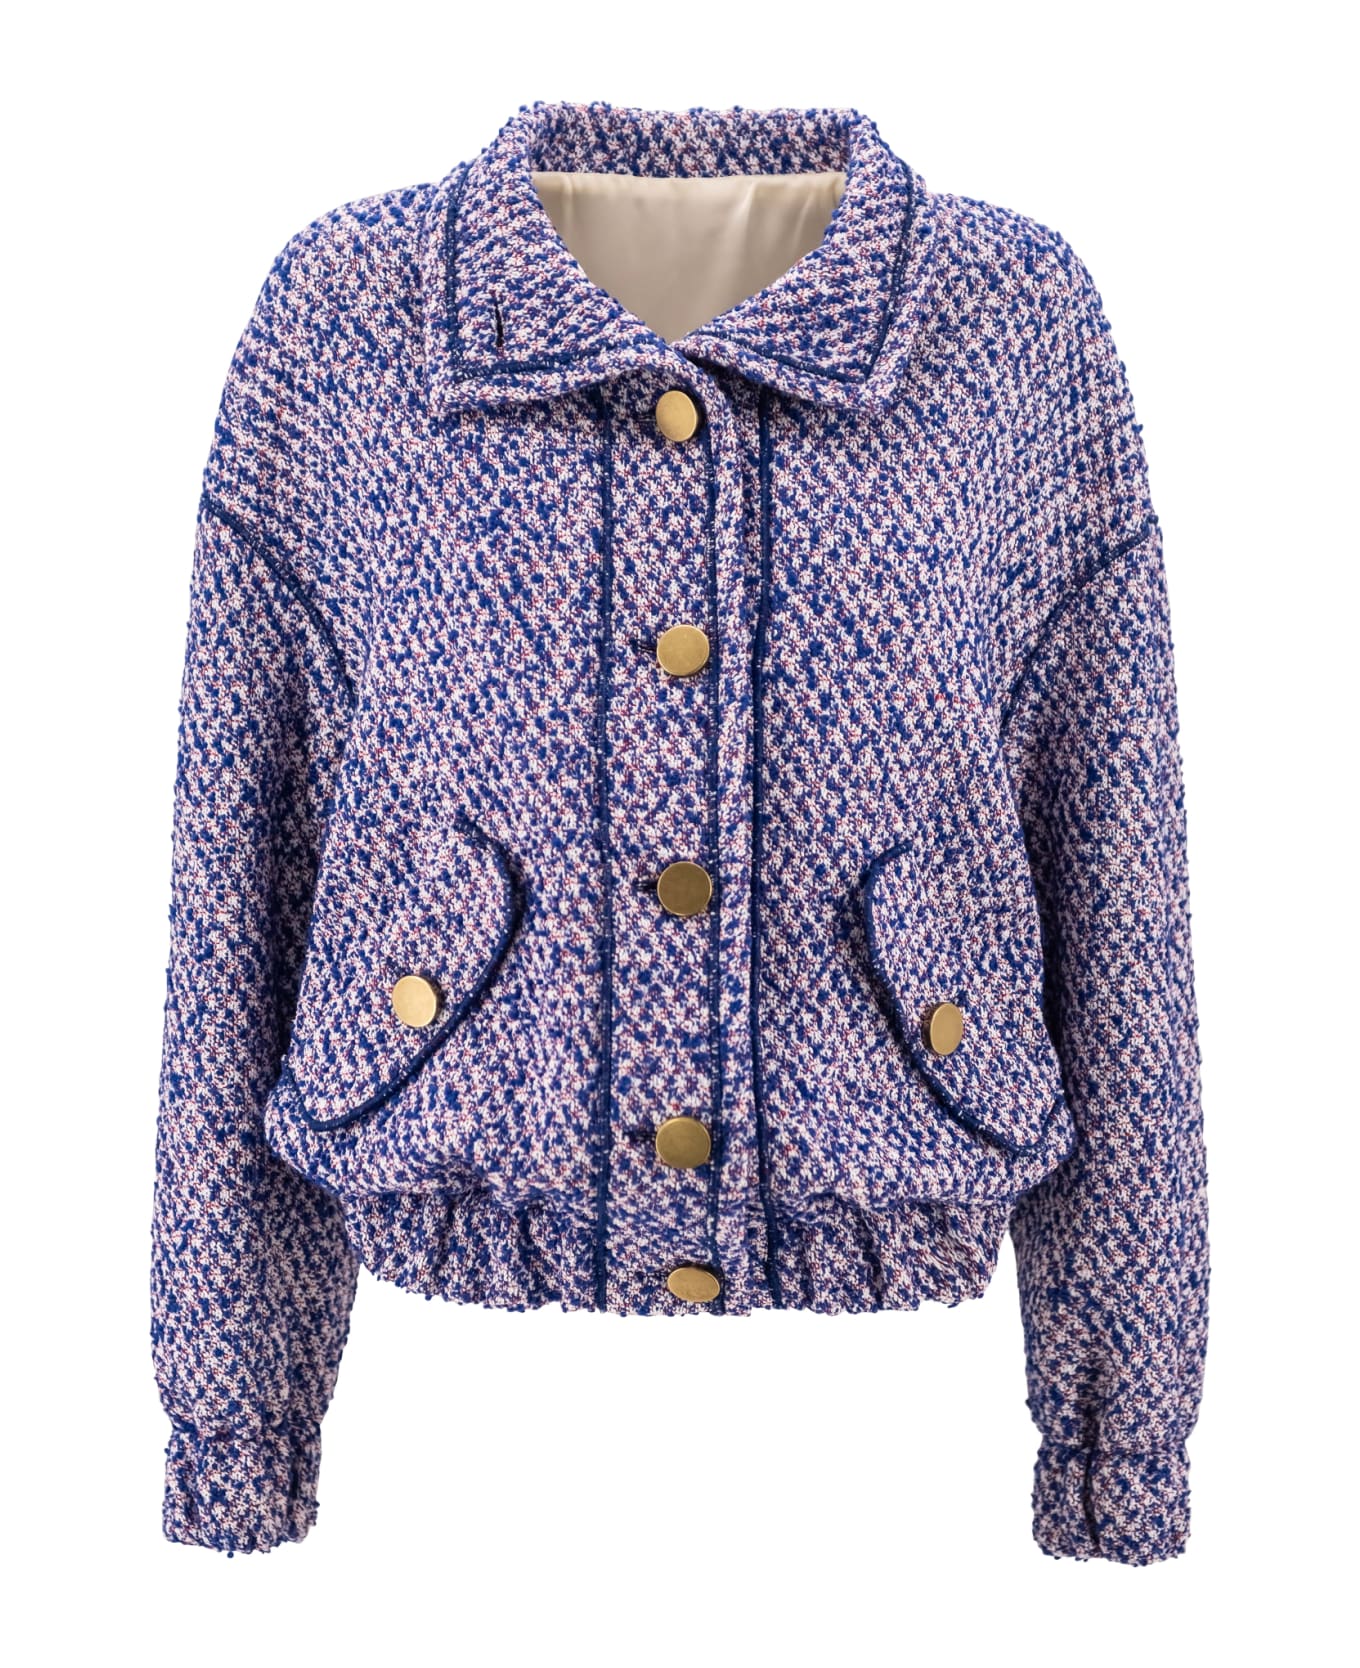 Philosophy di Lorenzo Serafini Multicolor Cotton Blend Oversize Jacket - FANTASIAAZZURRO